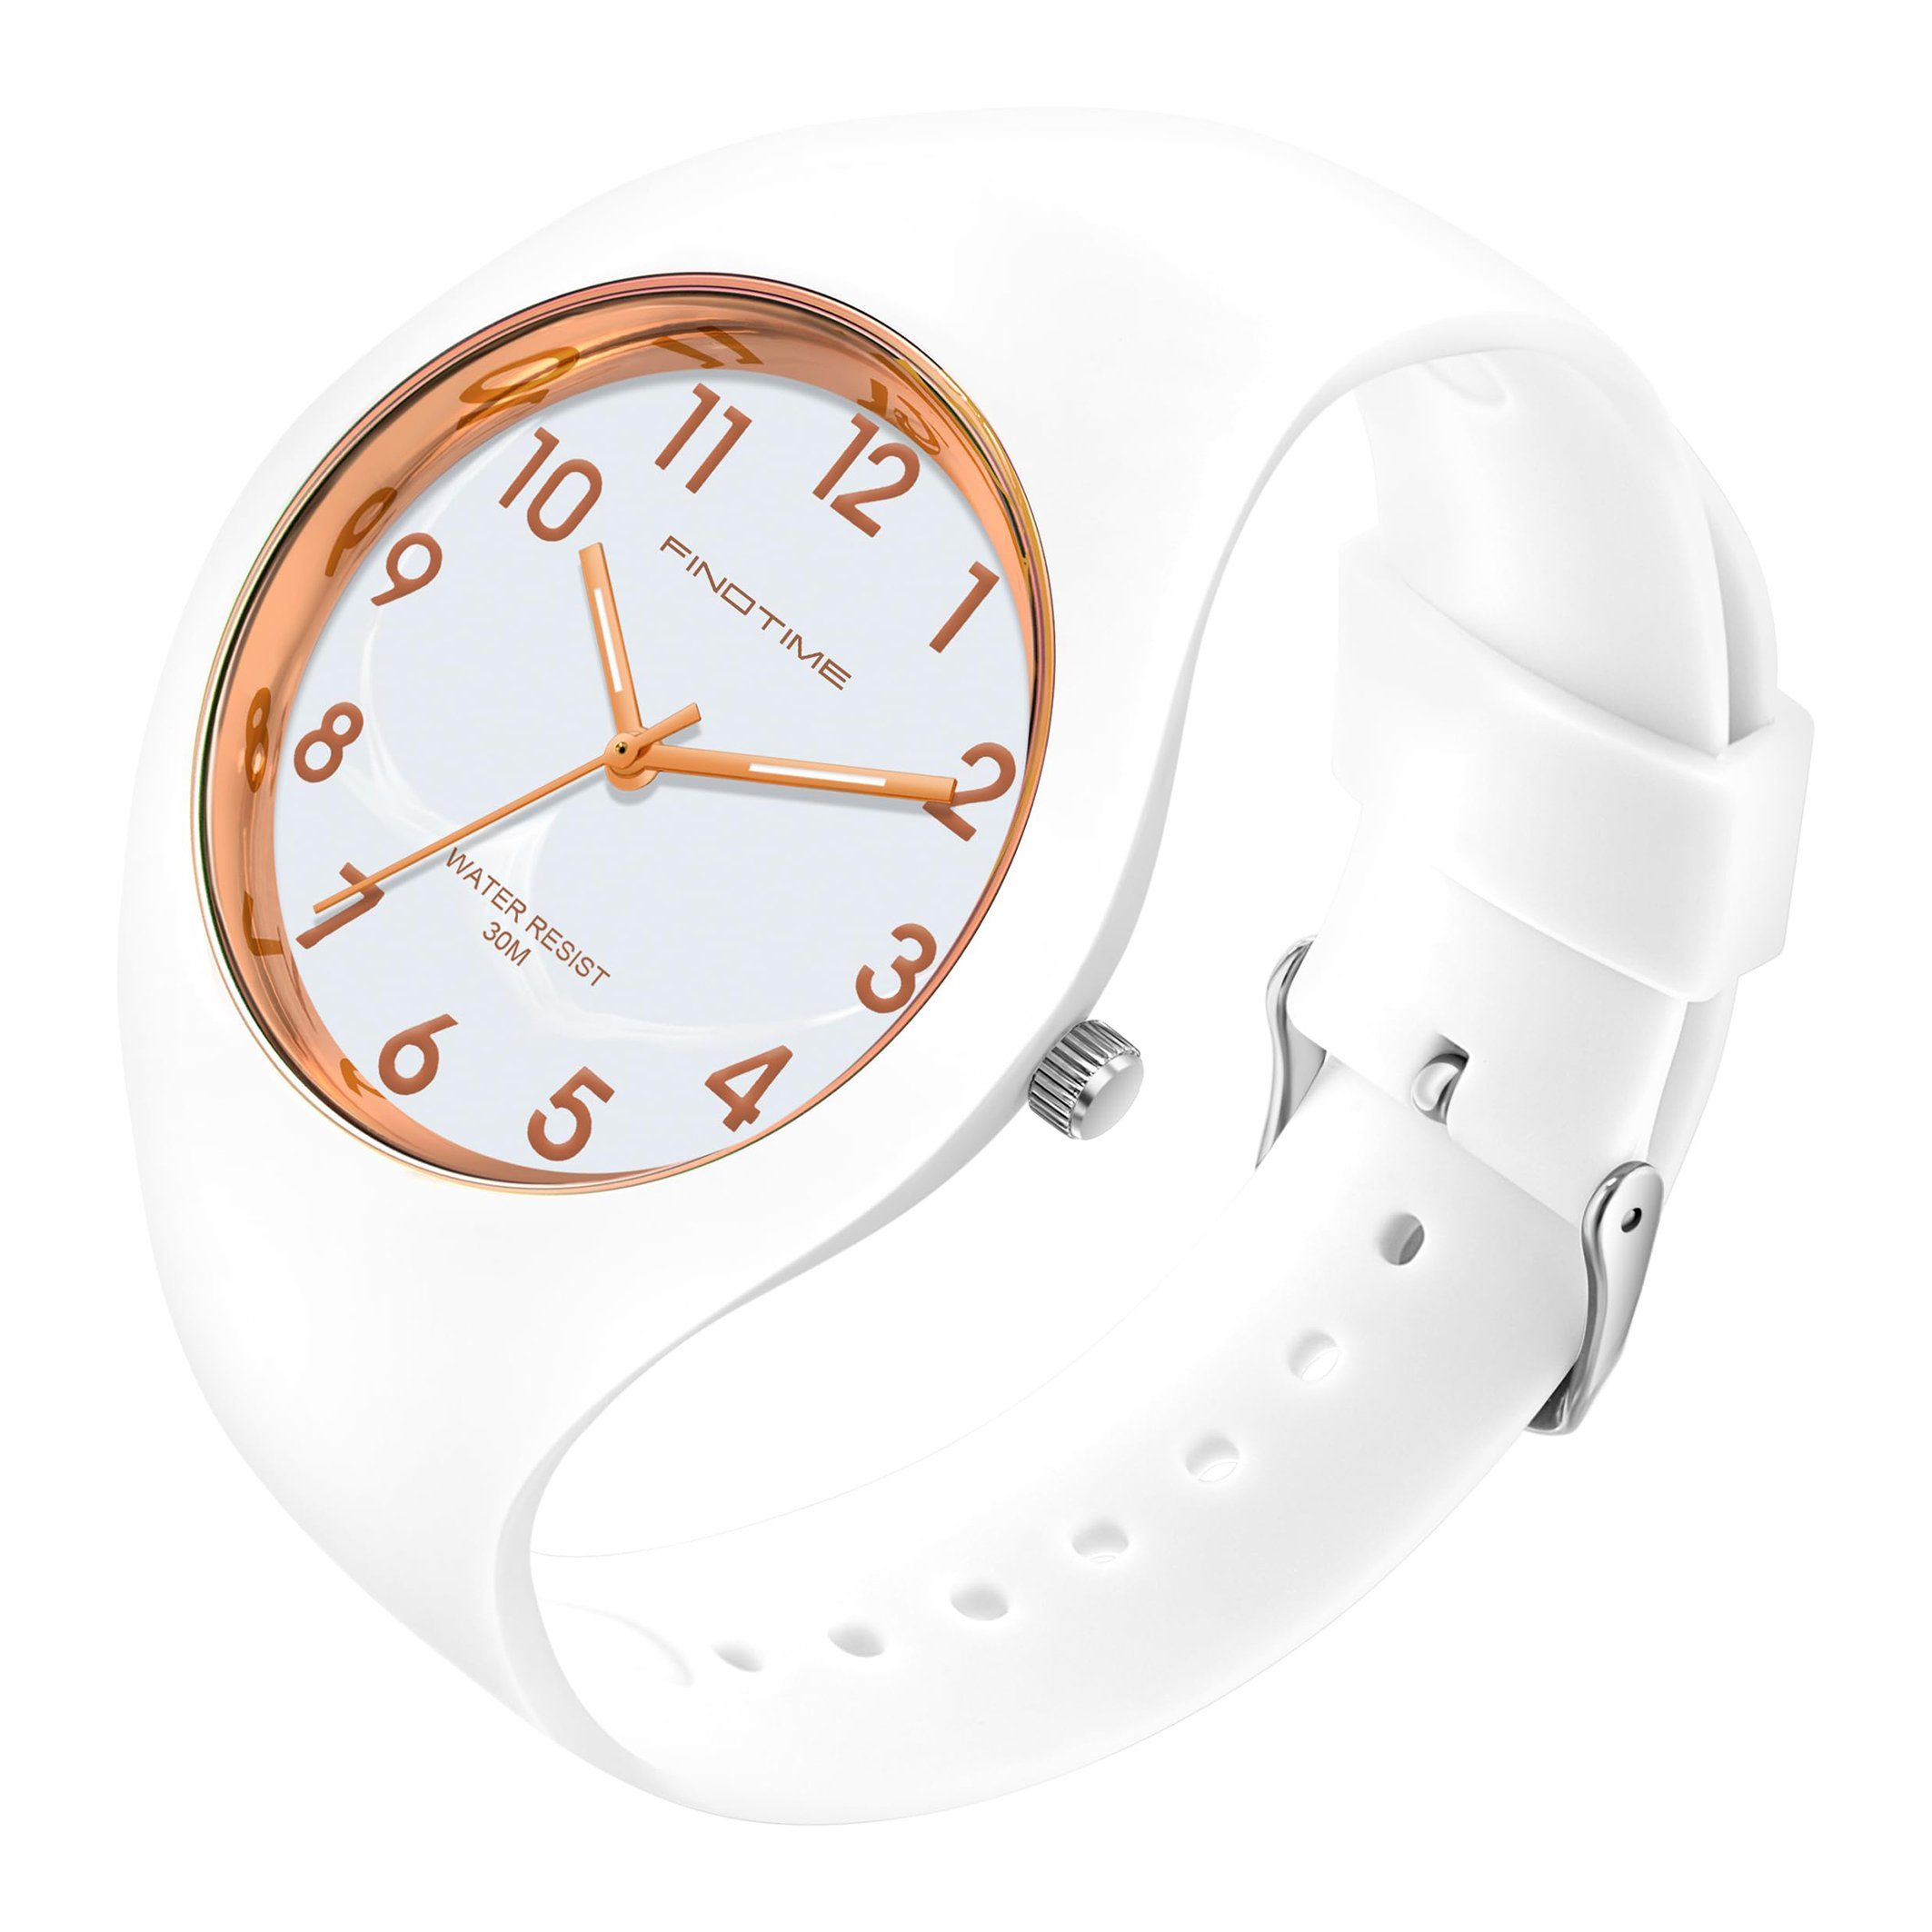 GelldG Uhr Armbanduhr Uhren analog Quarz mit Silikonarmband wasserdicht Sportuhr